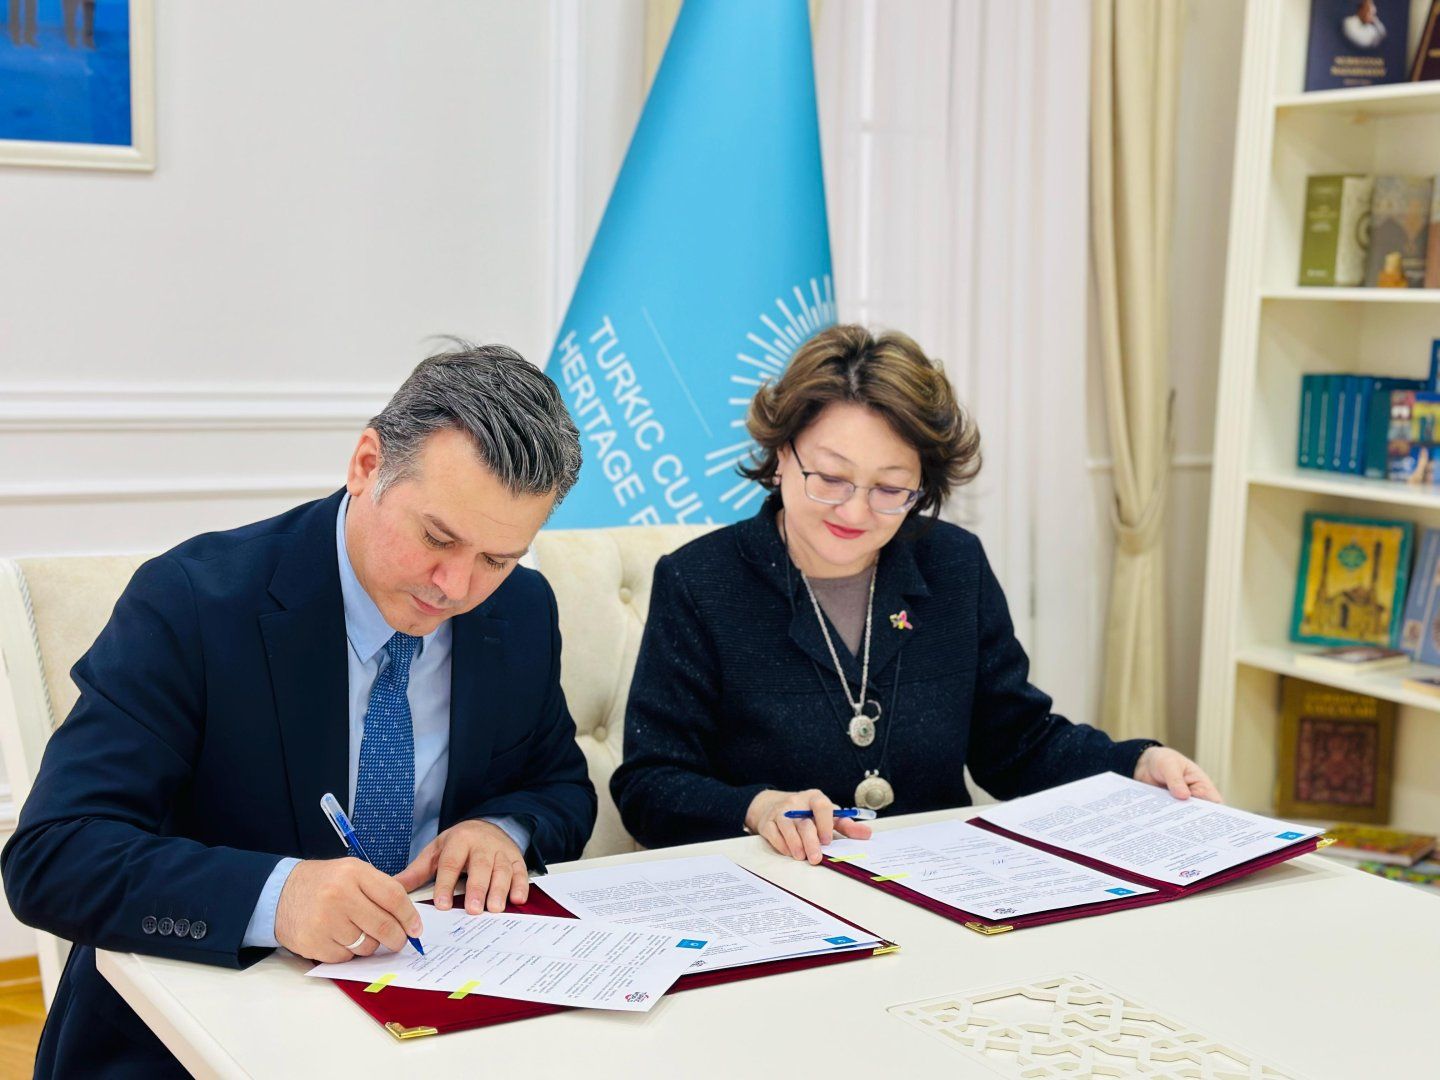 Turkic Culture and Heritage Foundation, Turkic World media platform sign memorandum [PHOTOS]